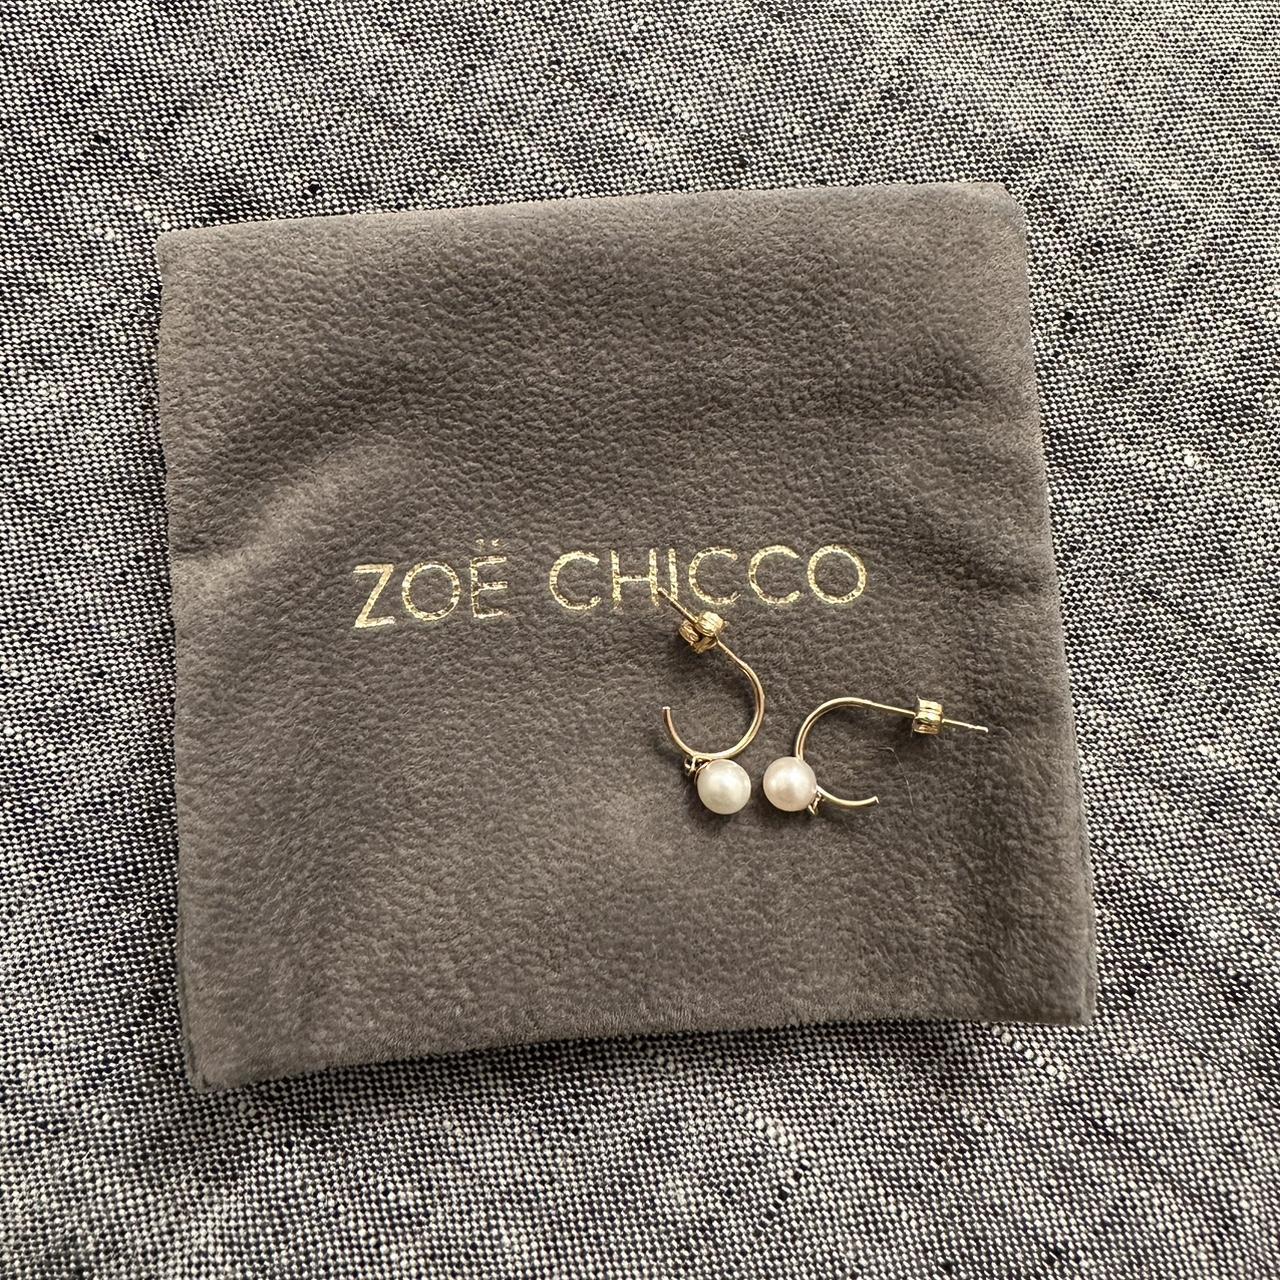 Zoë Chicco Women's Jewellery